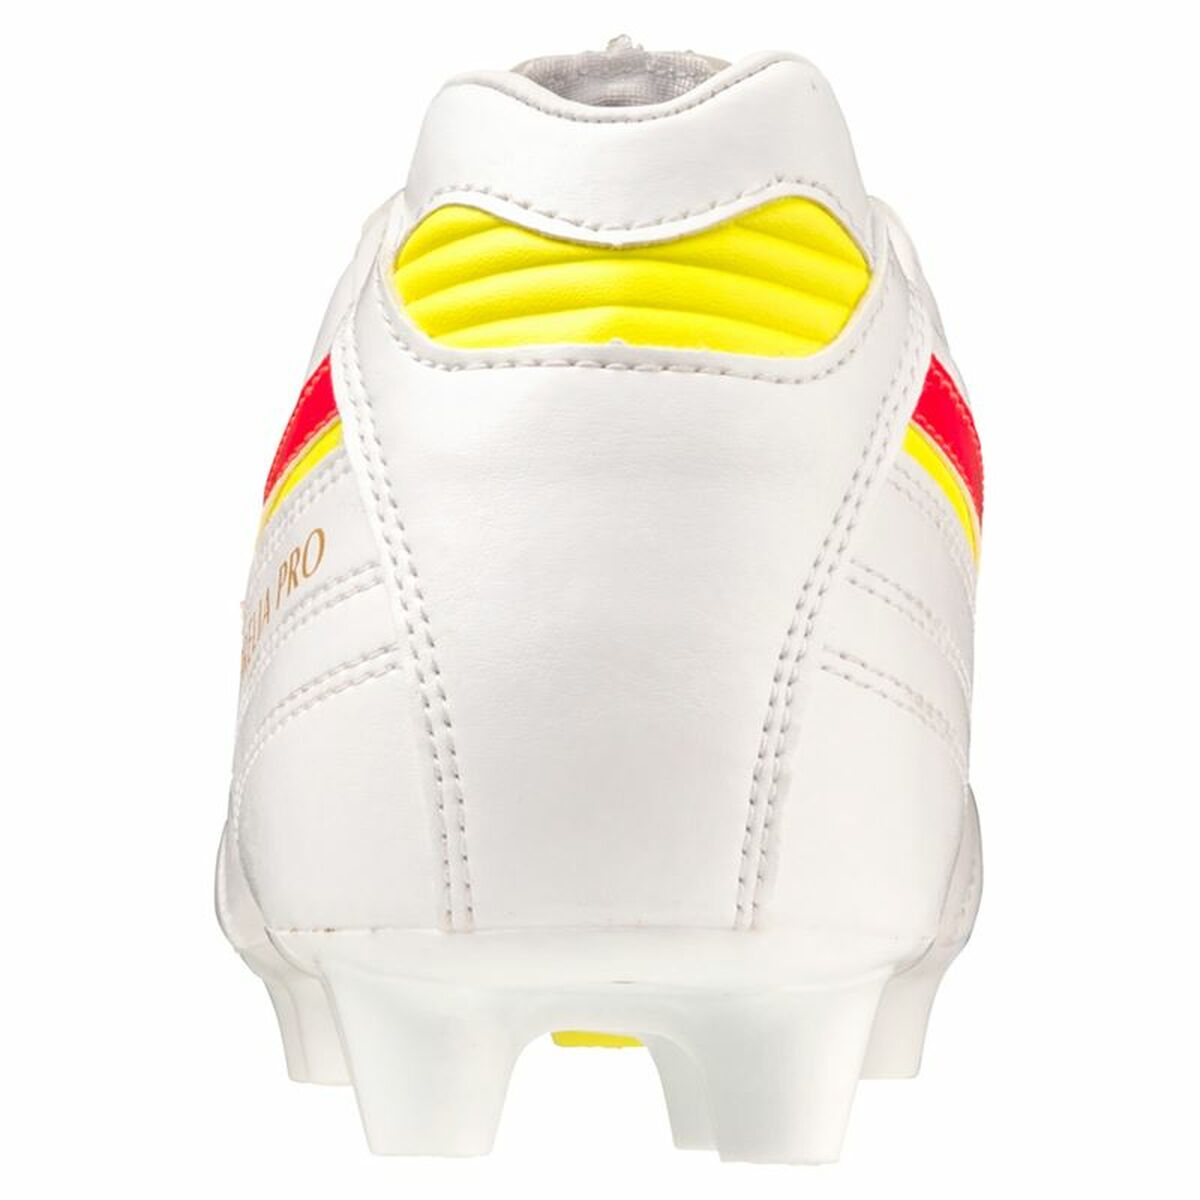 Chaussures de Football pour Adultes Mizuno Morelia II Pro Blanc